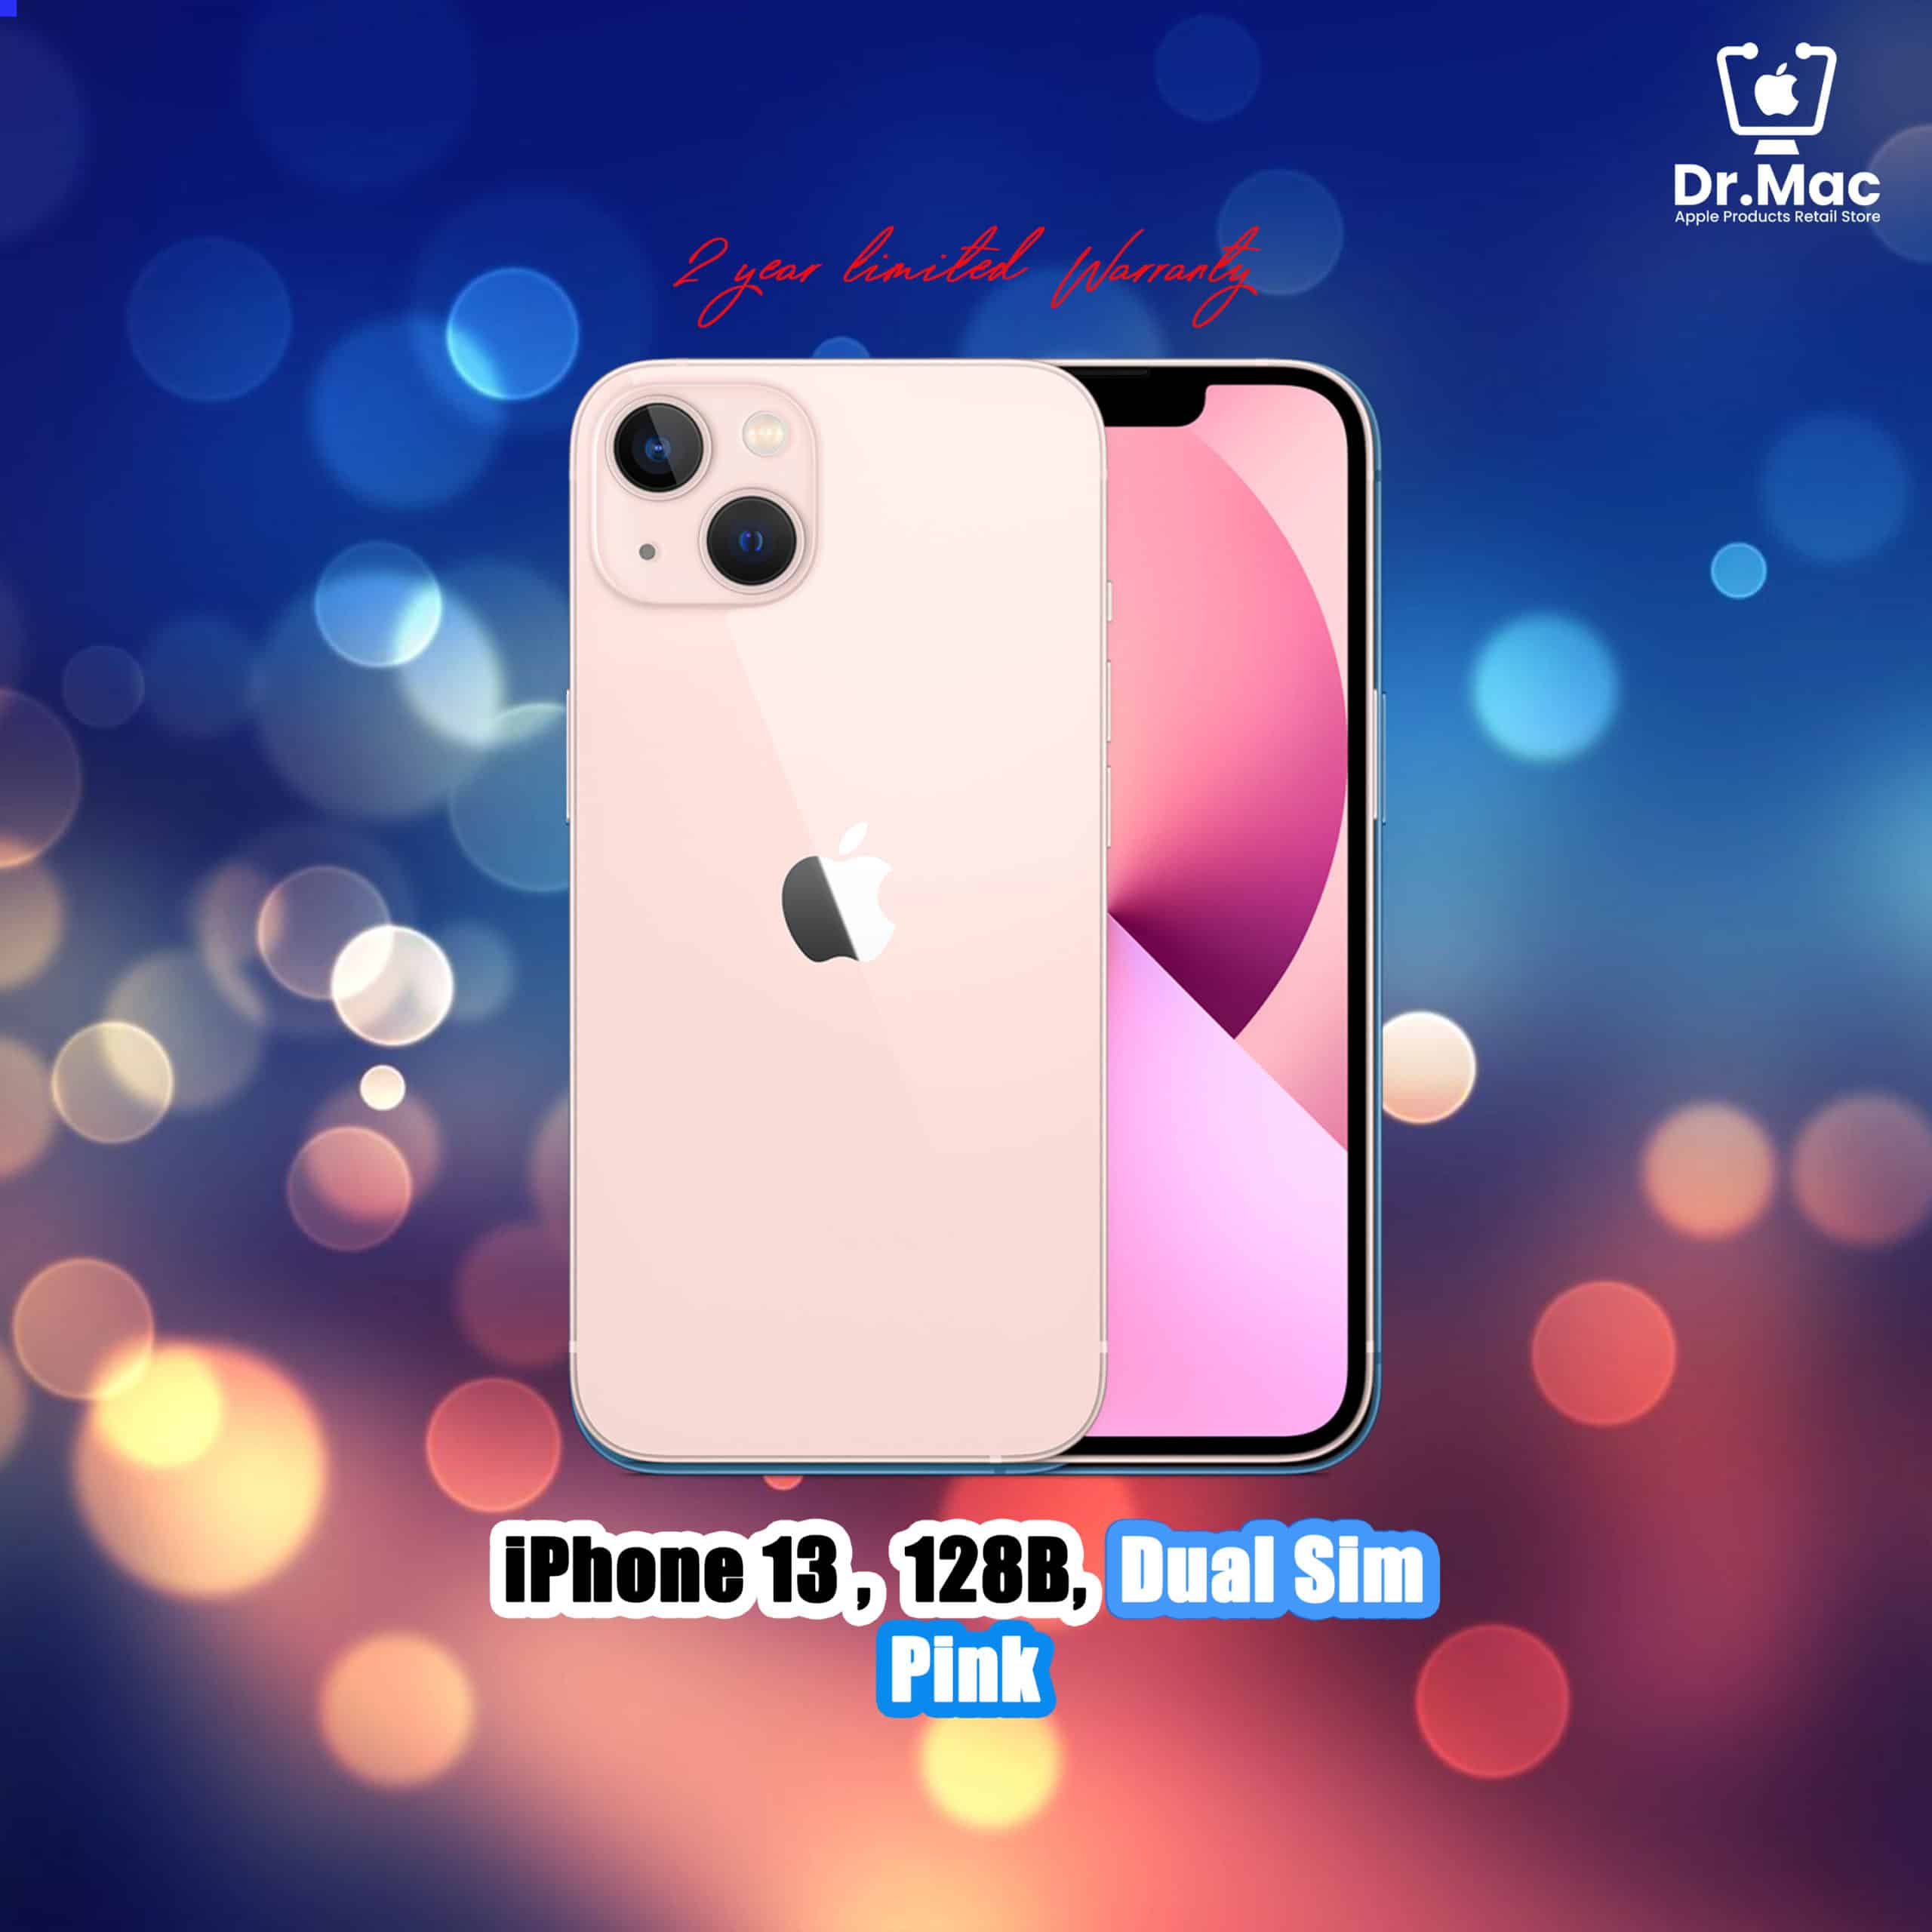 iPhone 13 (128gb) Pink, Dual Sim